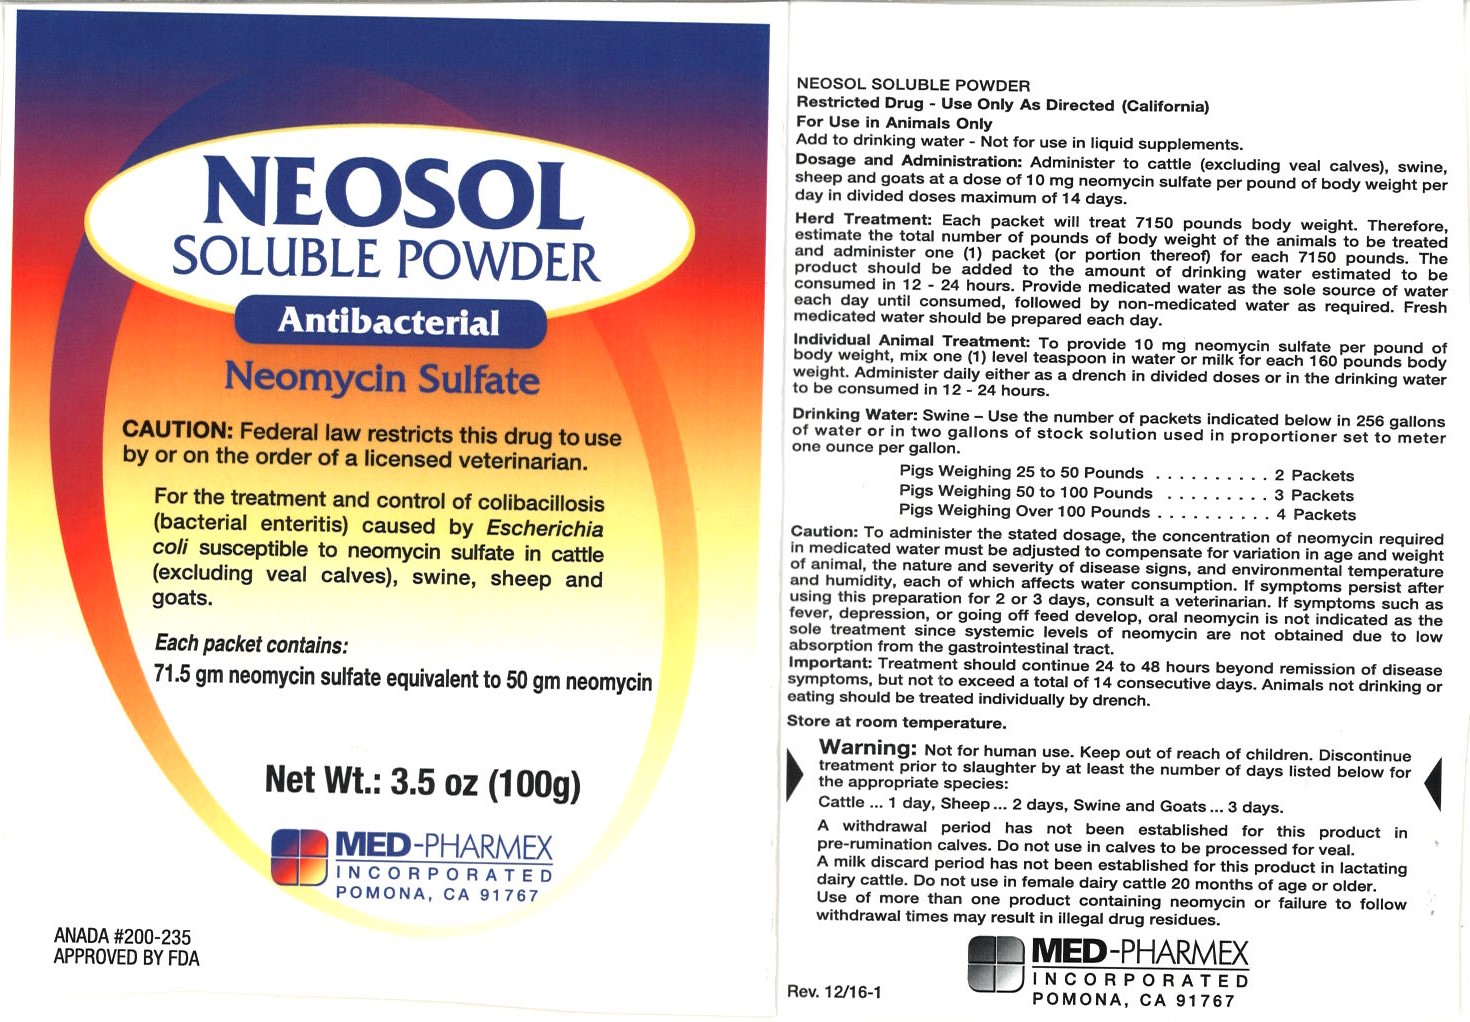 Neosol Soluble Powder 100g Label